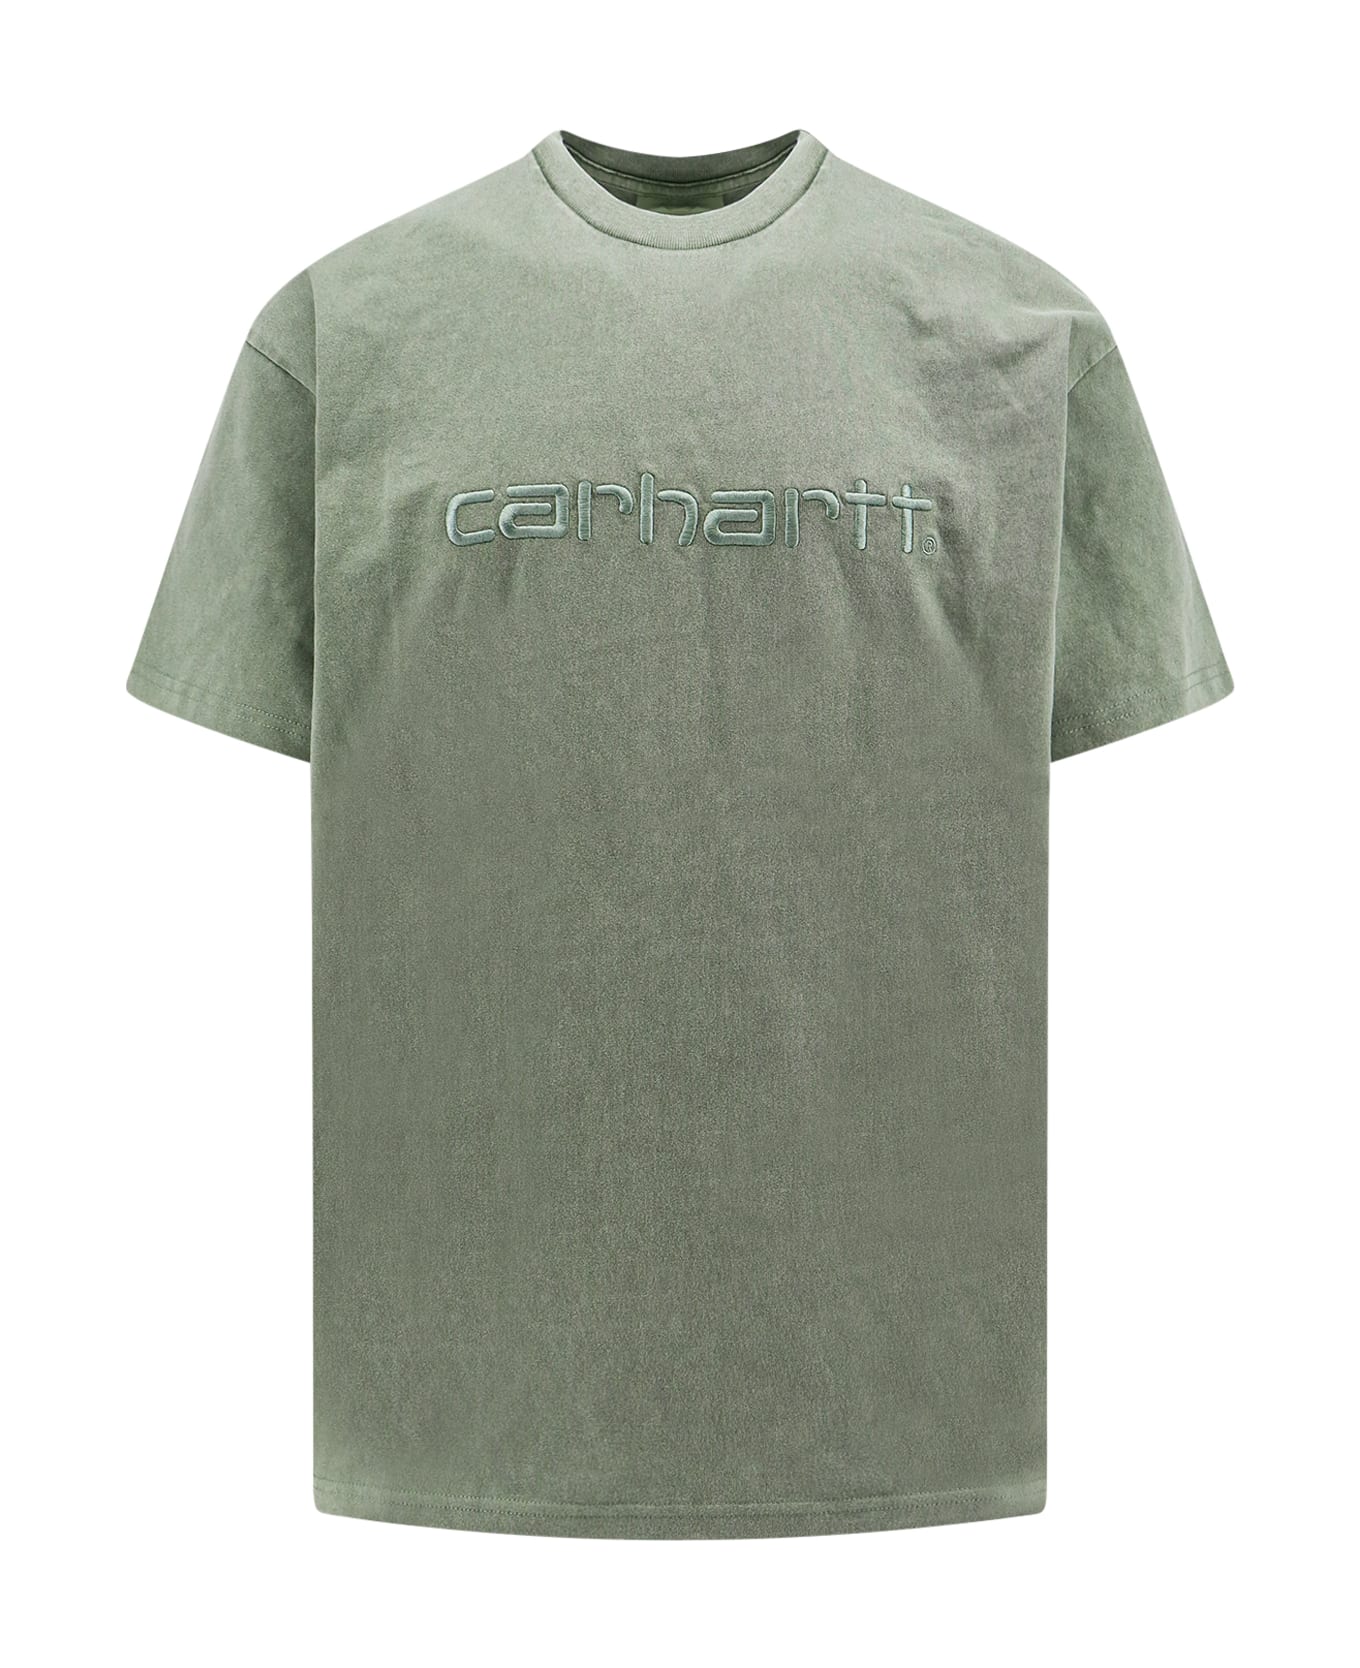 Carhartt Duster T-shirt - Green シャツ